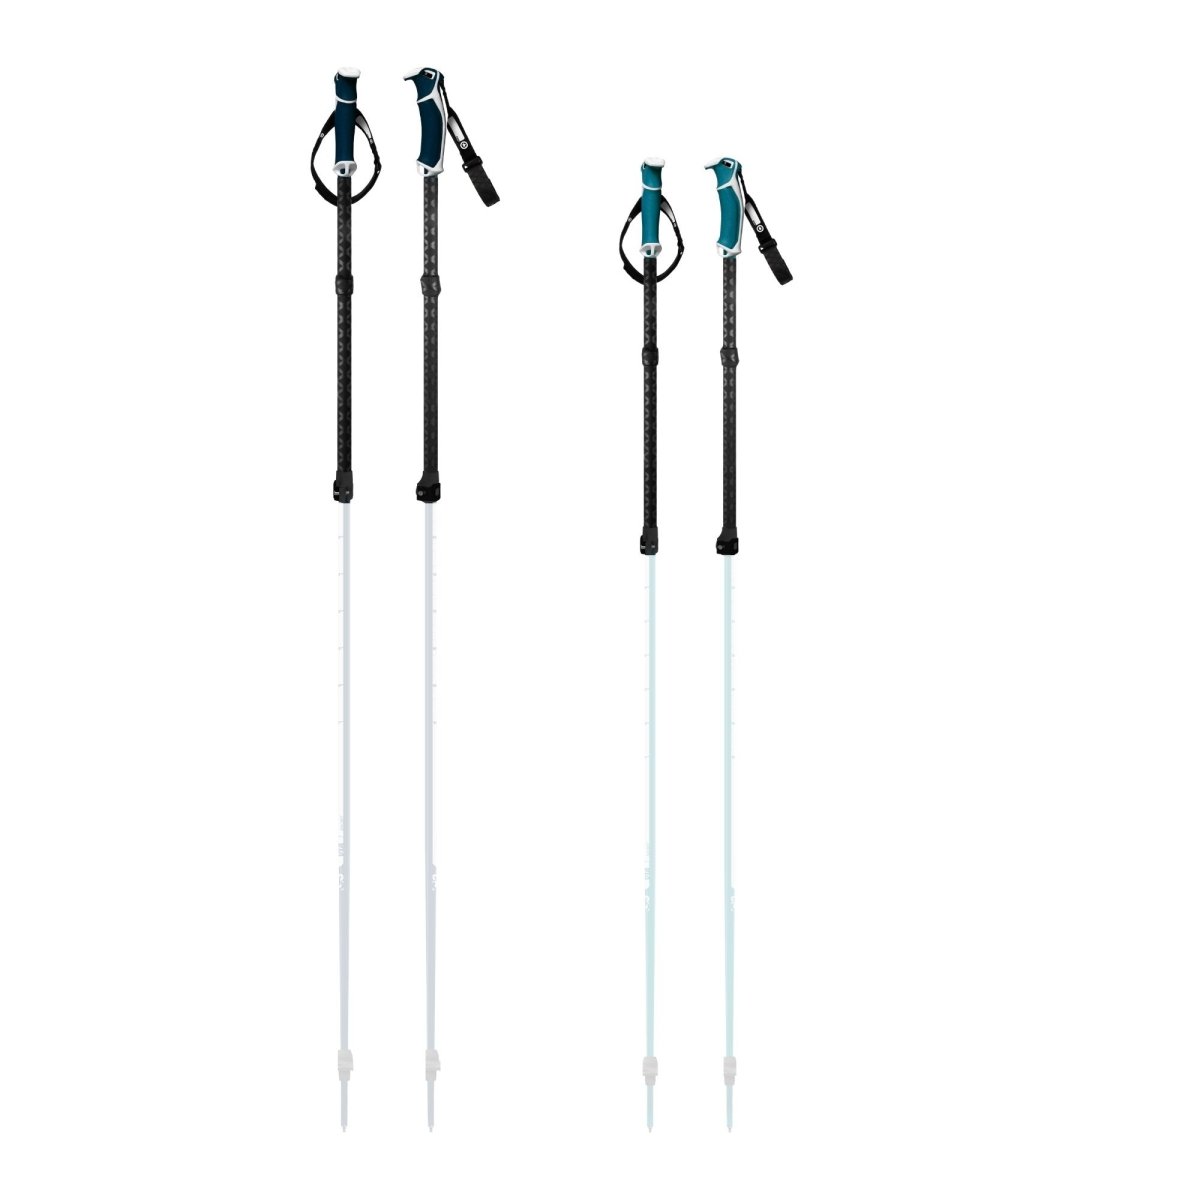 VIA Ski Pole Replacement Shaft - Parts - G3 Store [CAD]